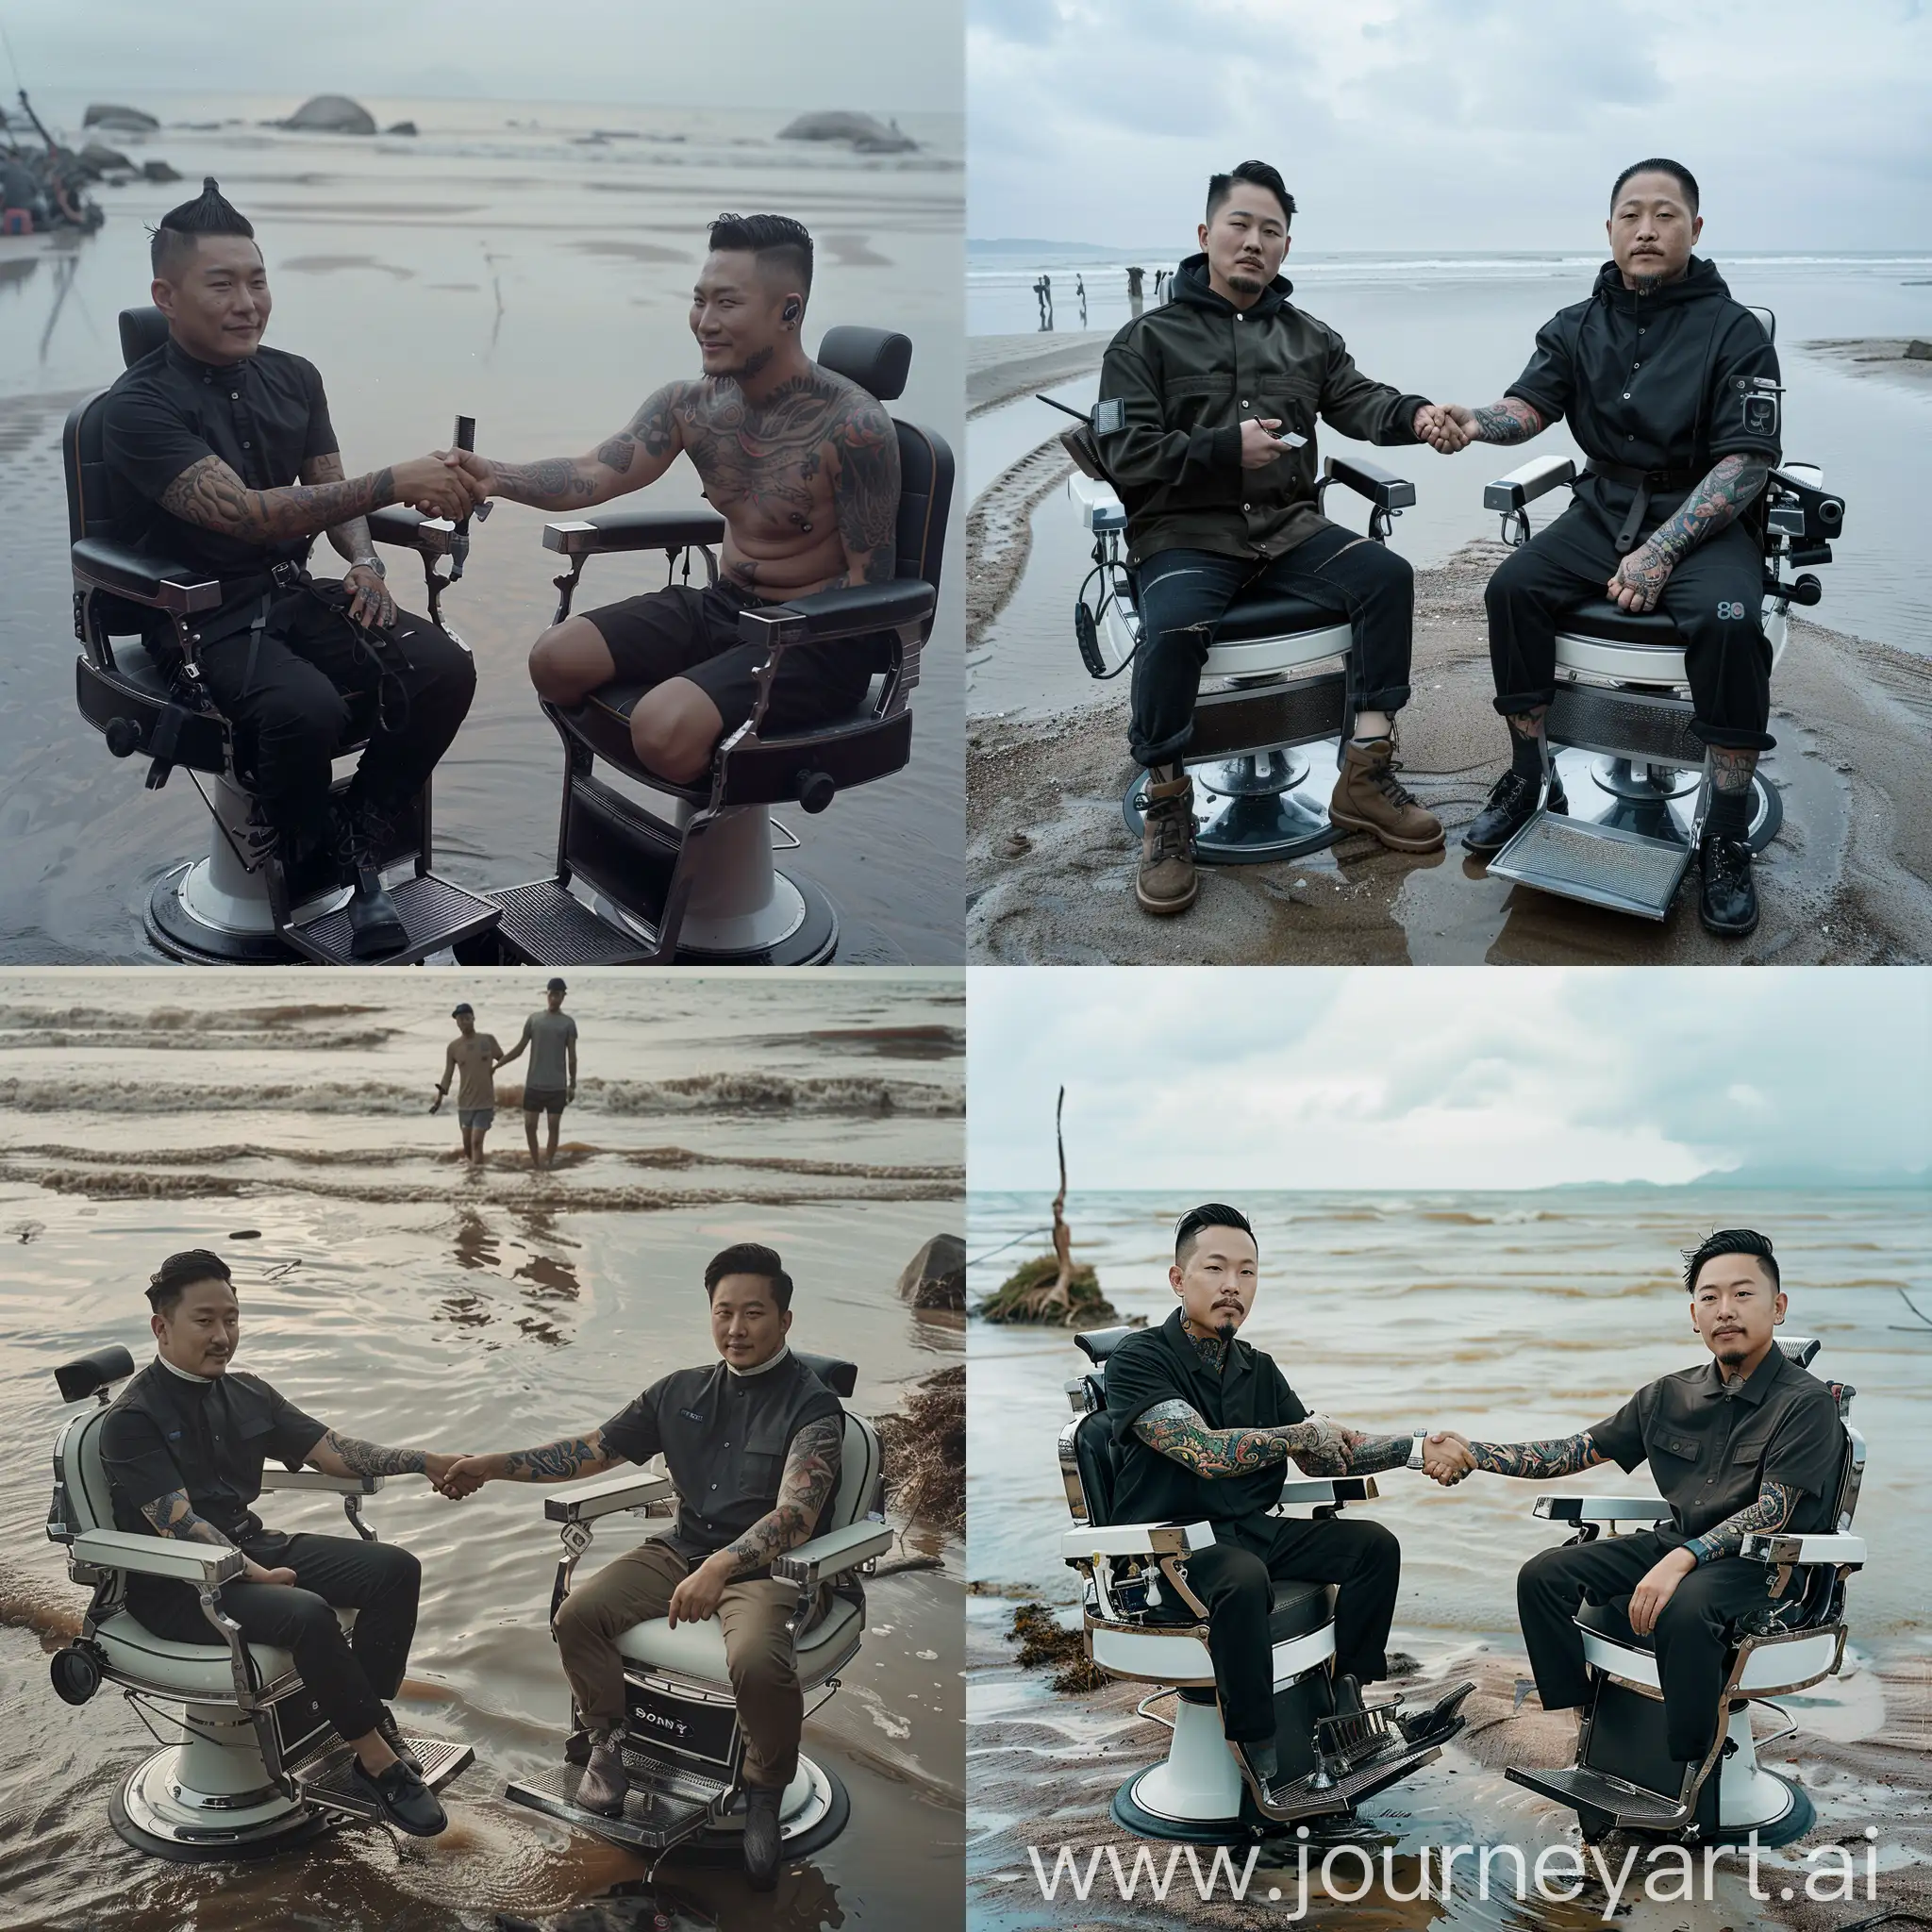 2 pria korea, wajah bersih, sedang duduk di kursi barber premium, berjabat tangan, bertatto, menghadap kamera, di pinggir pantai tergenang, kamera sony, memegang clipper, dreamcacher 8K, 18mm lens, leica kamera